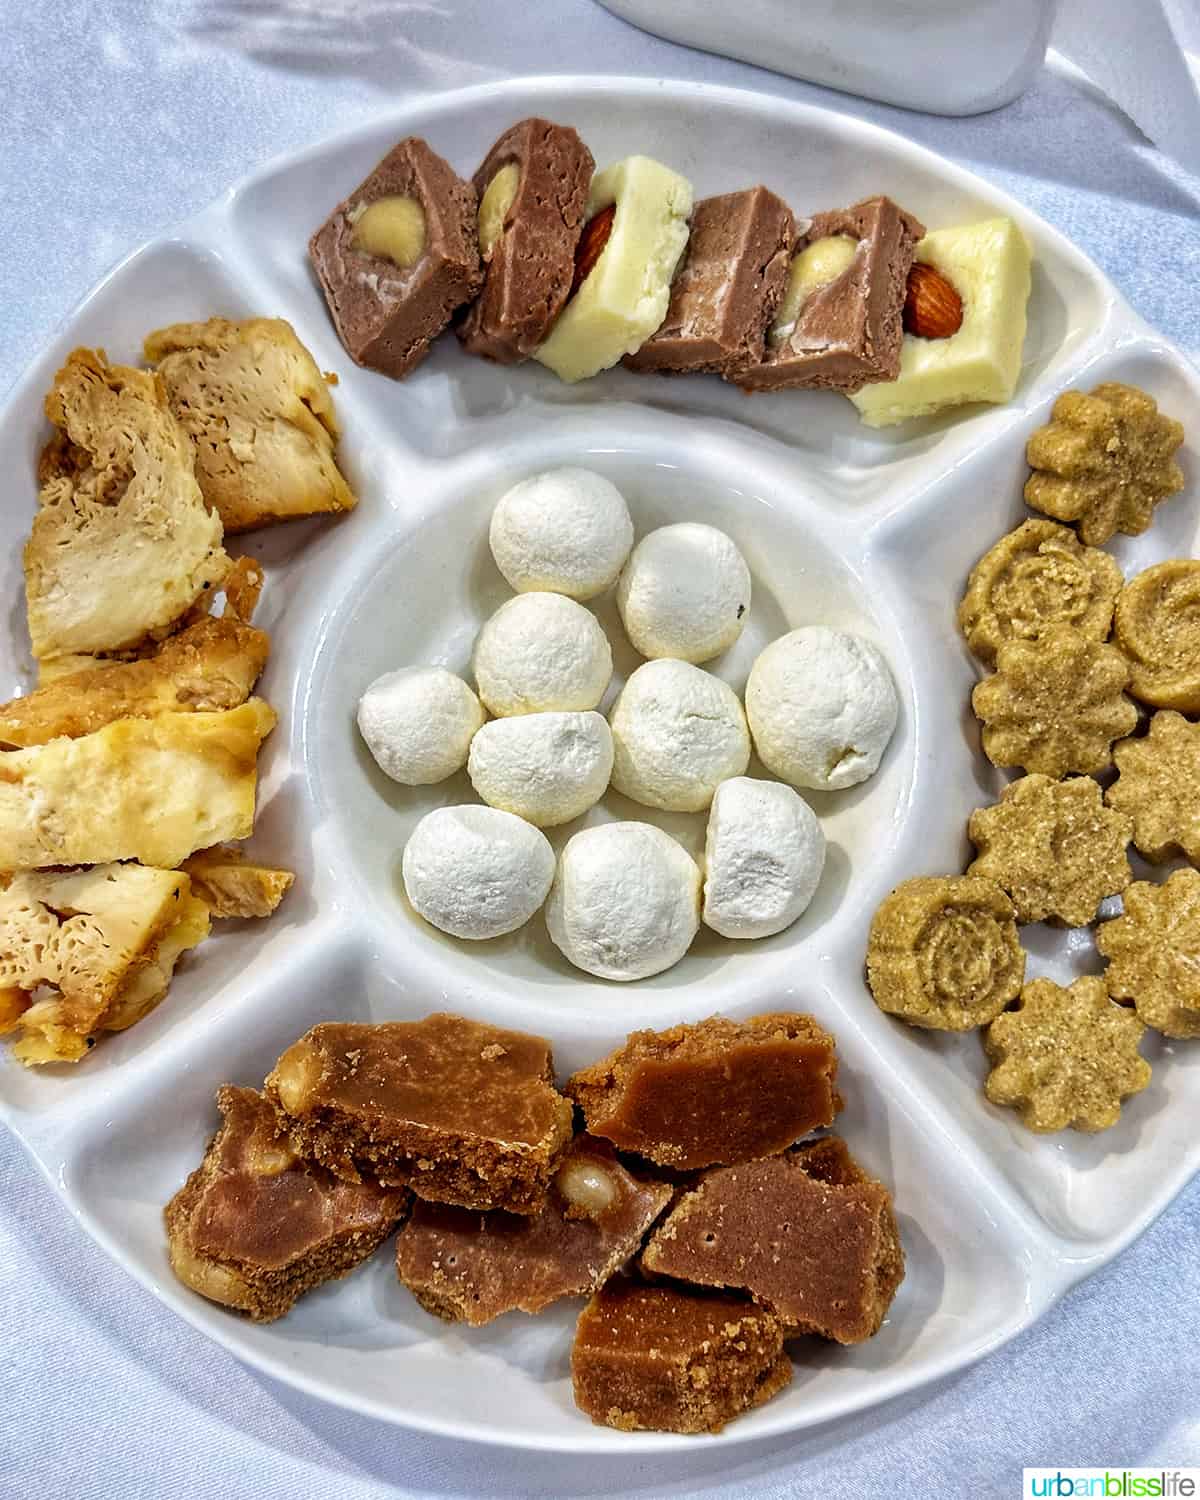 round tray of various Kazakhstan desserts including kurt.